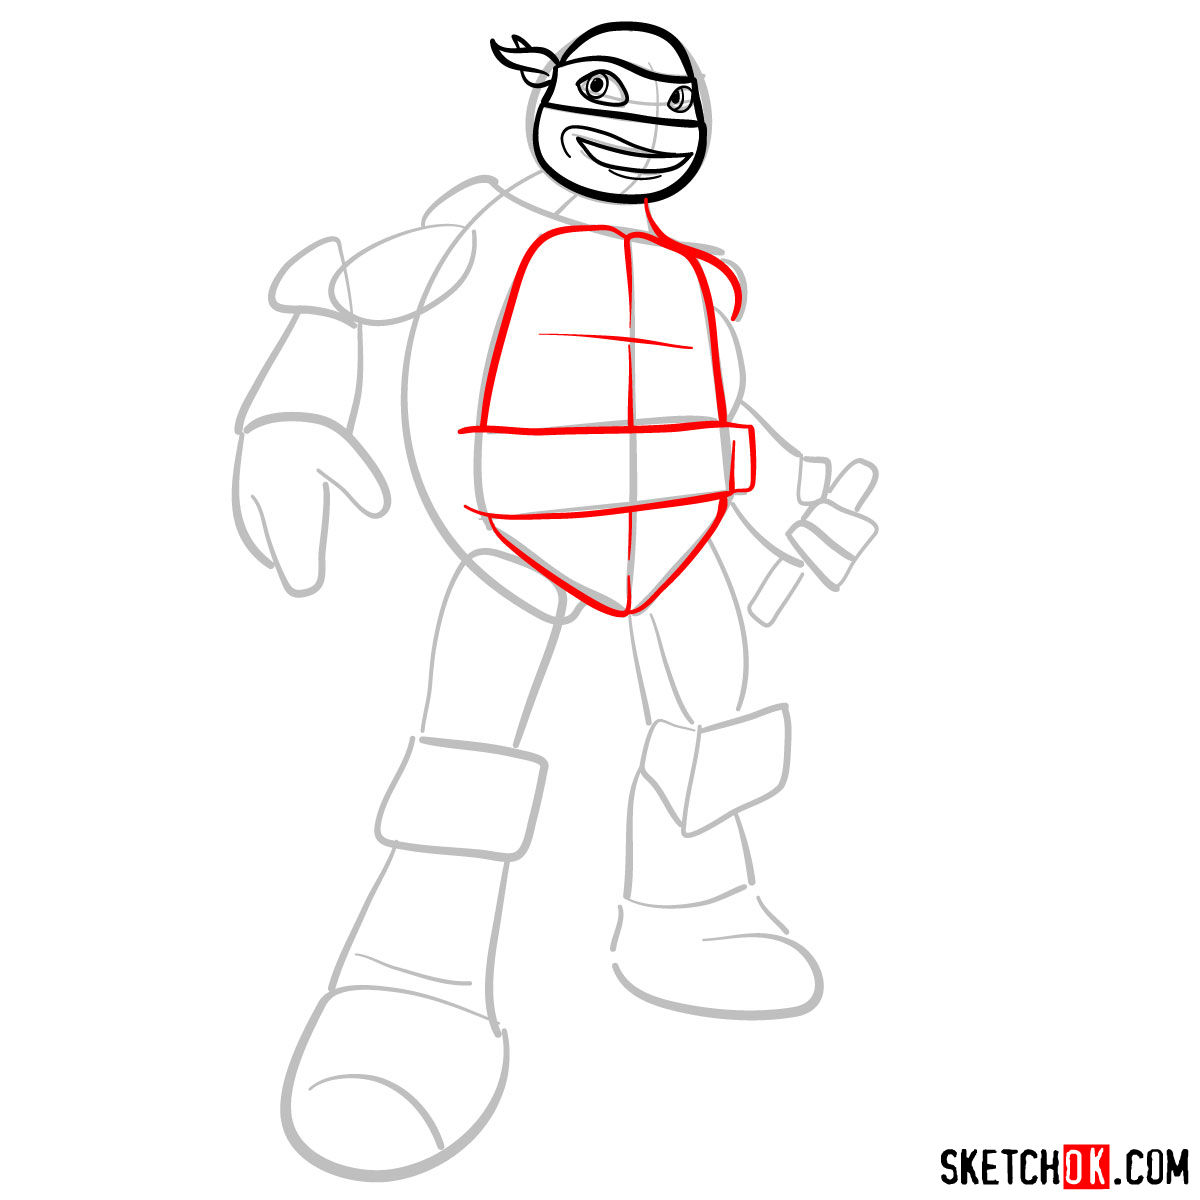 How to draw Michaelangelo ninja turtle cartoon style - step 05